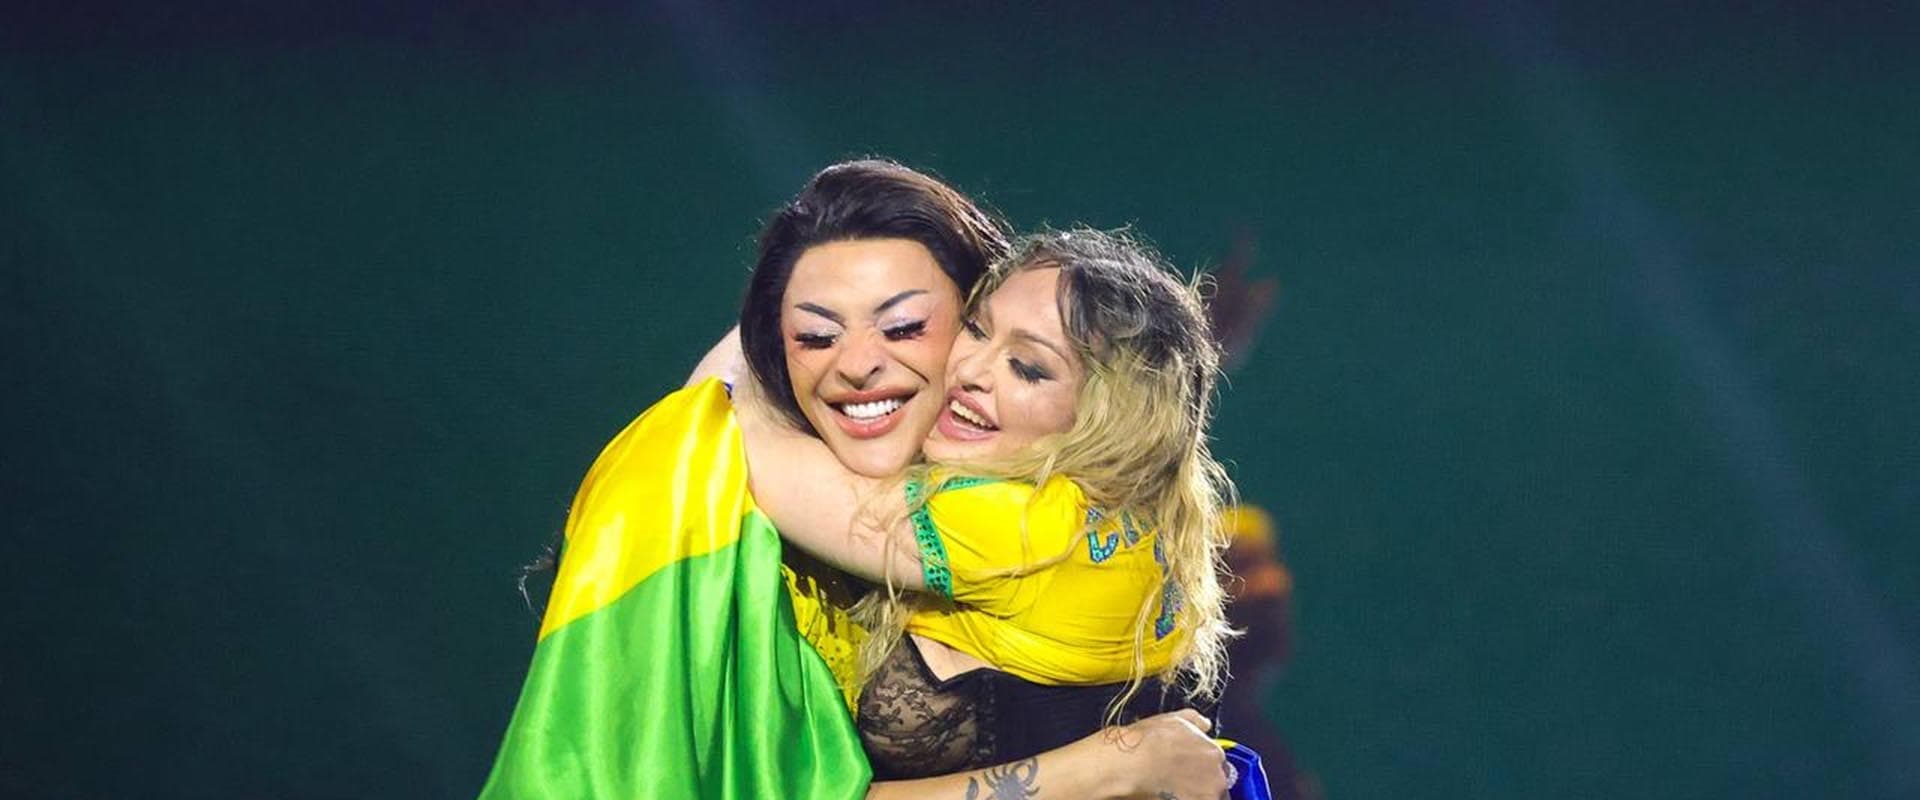 Madonna: The Celebration Tour in Rio